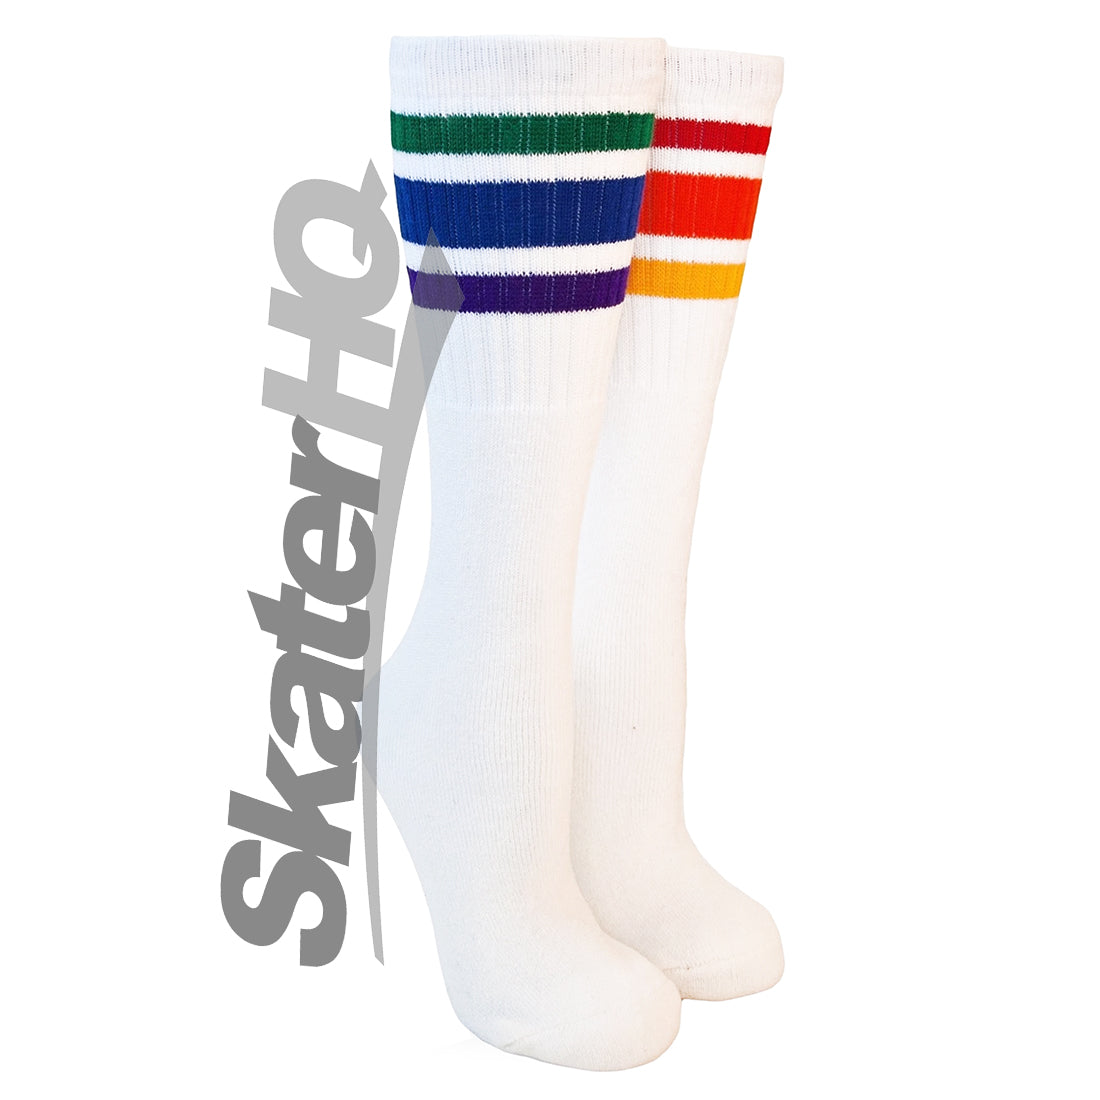 Pride Courage 19 Tube Under-Knee Socks - White/Rainbow Apparel Socks